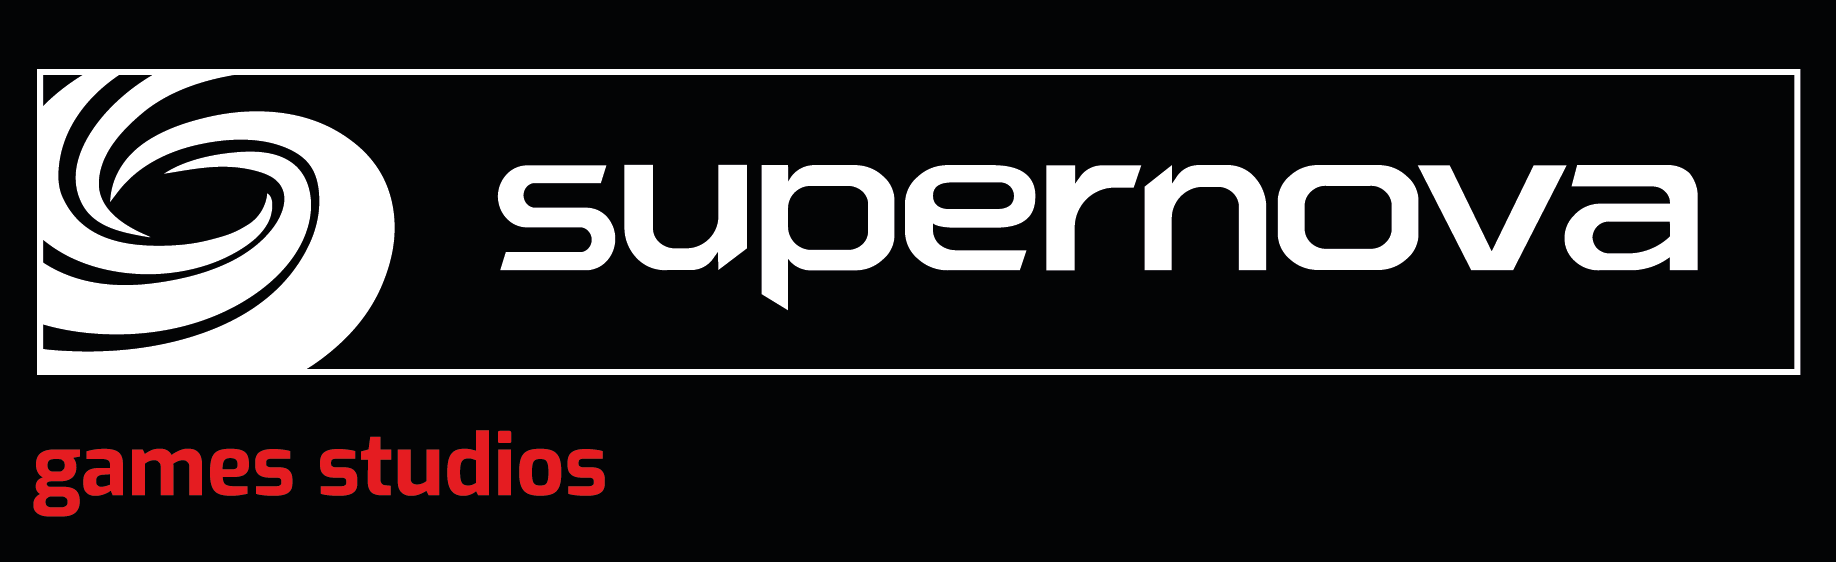 Supernova Games Studios